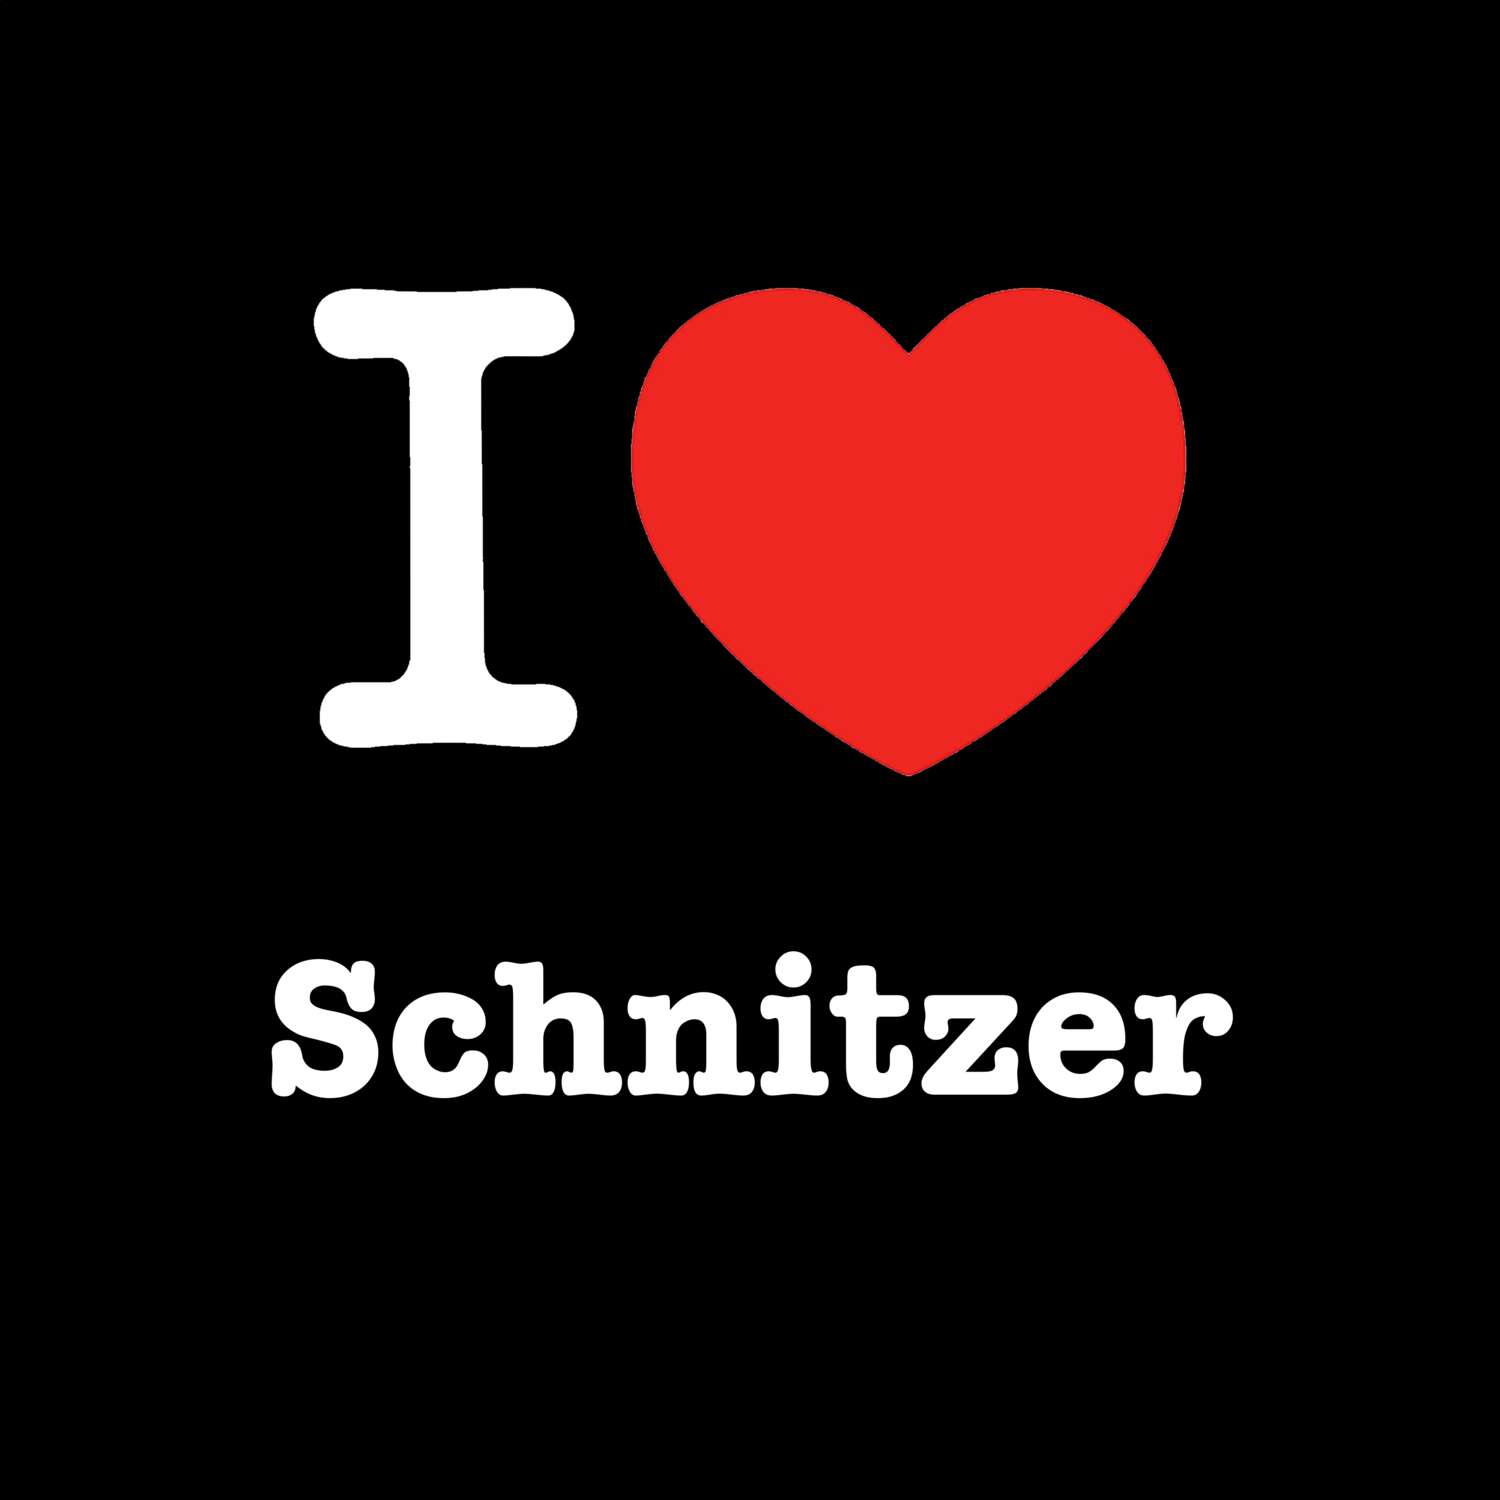 Schnitzer T-Shirt »I love«